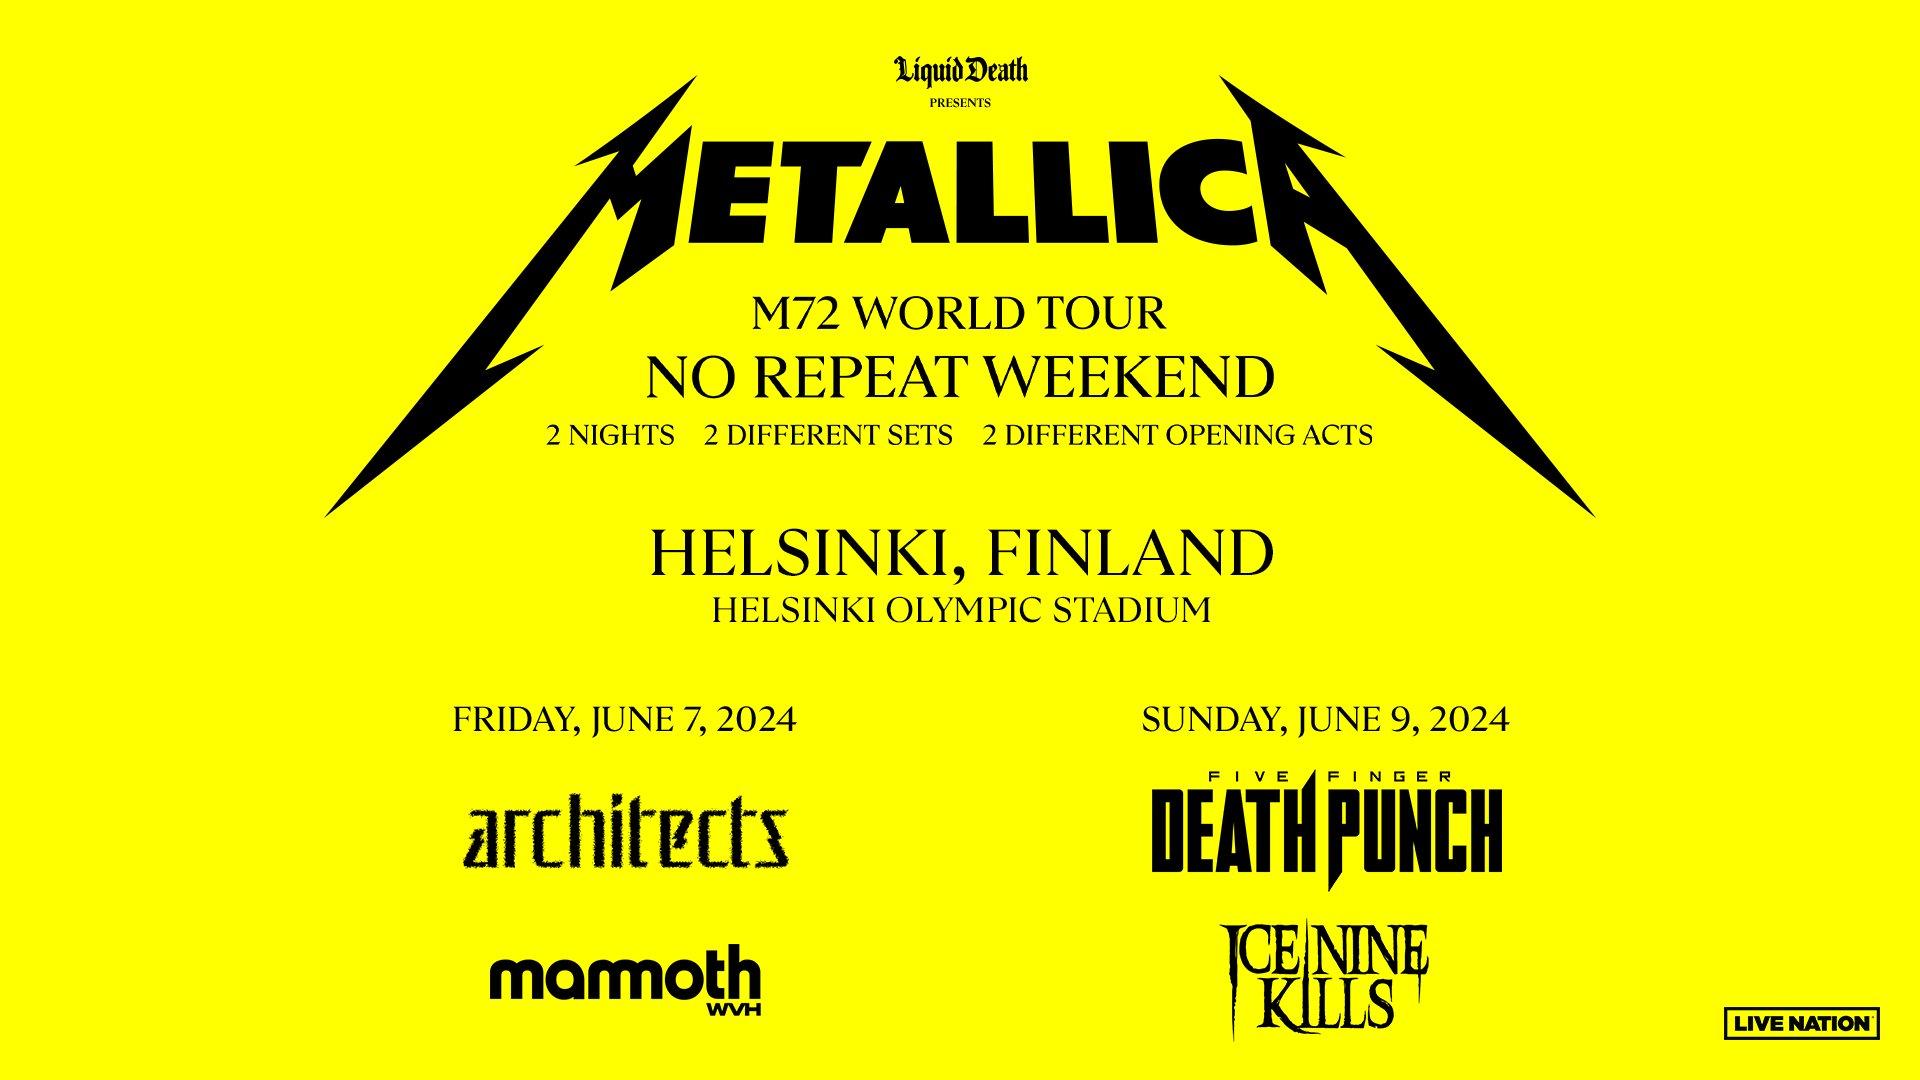 Metallica at Helsinki Olympic Stadium in Helsinki, Finland on June 7